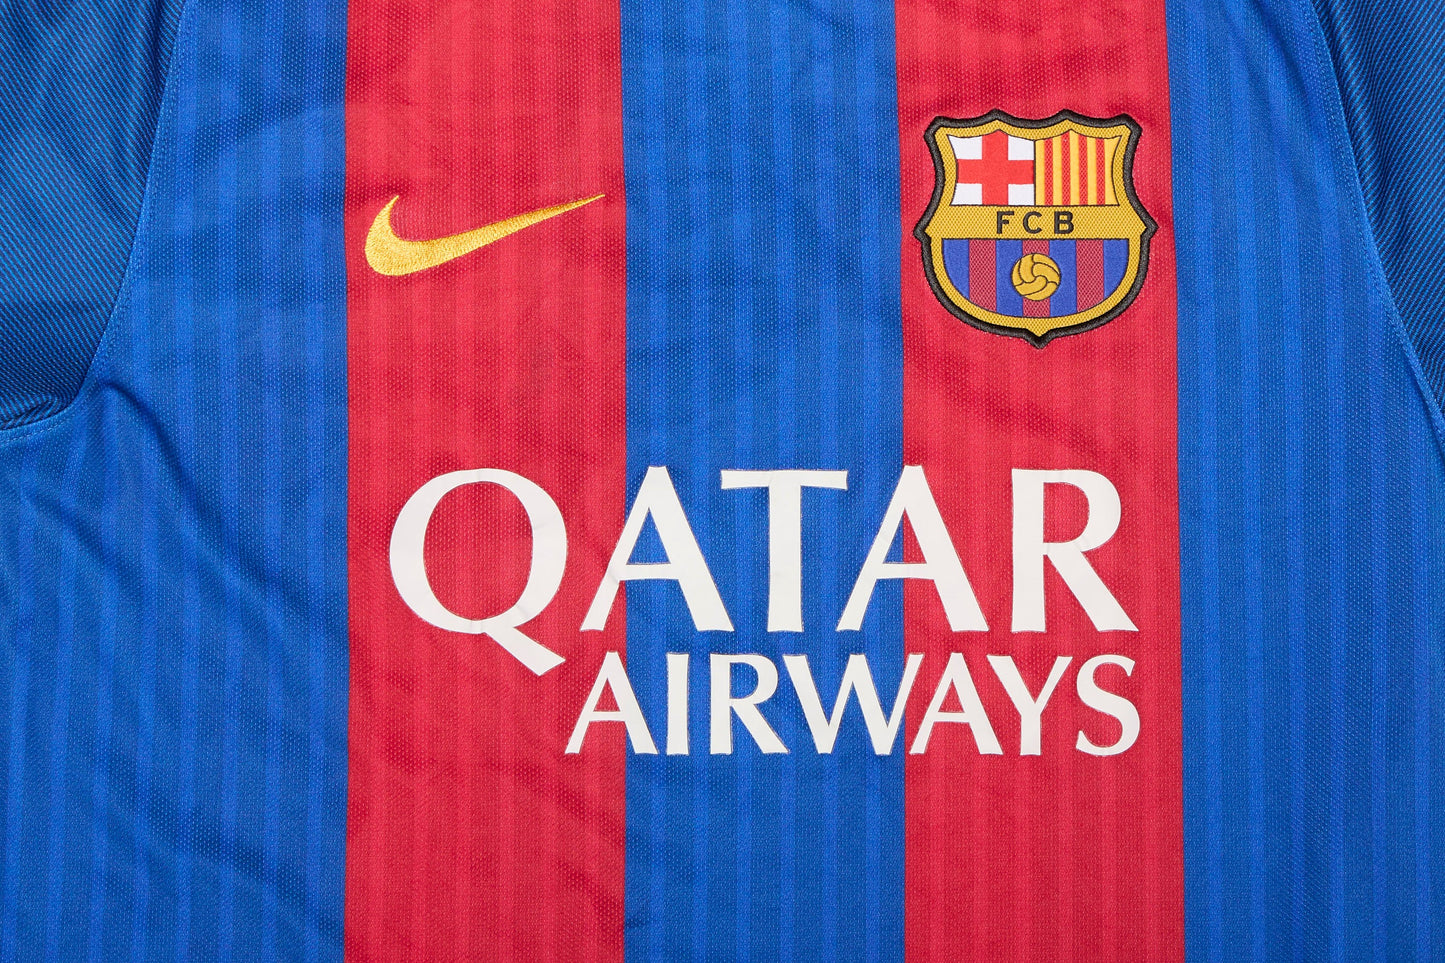 Mens Nike FC Barcelona Top - M